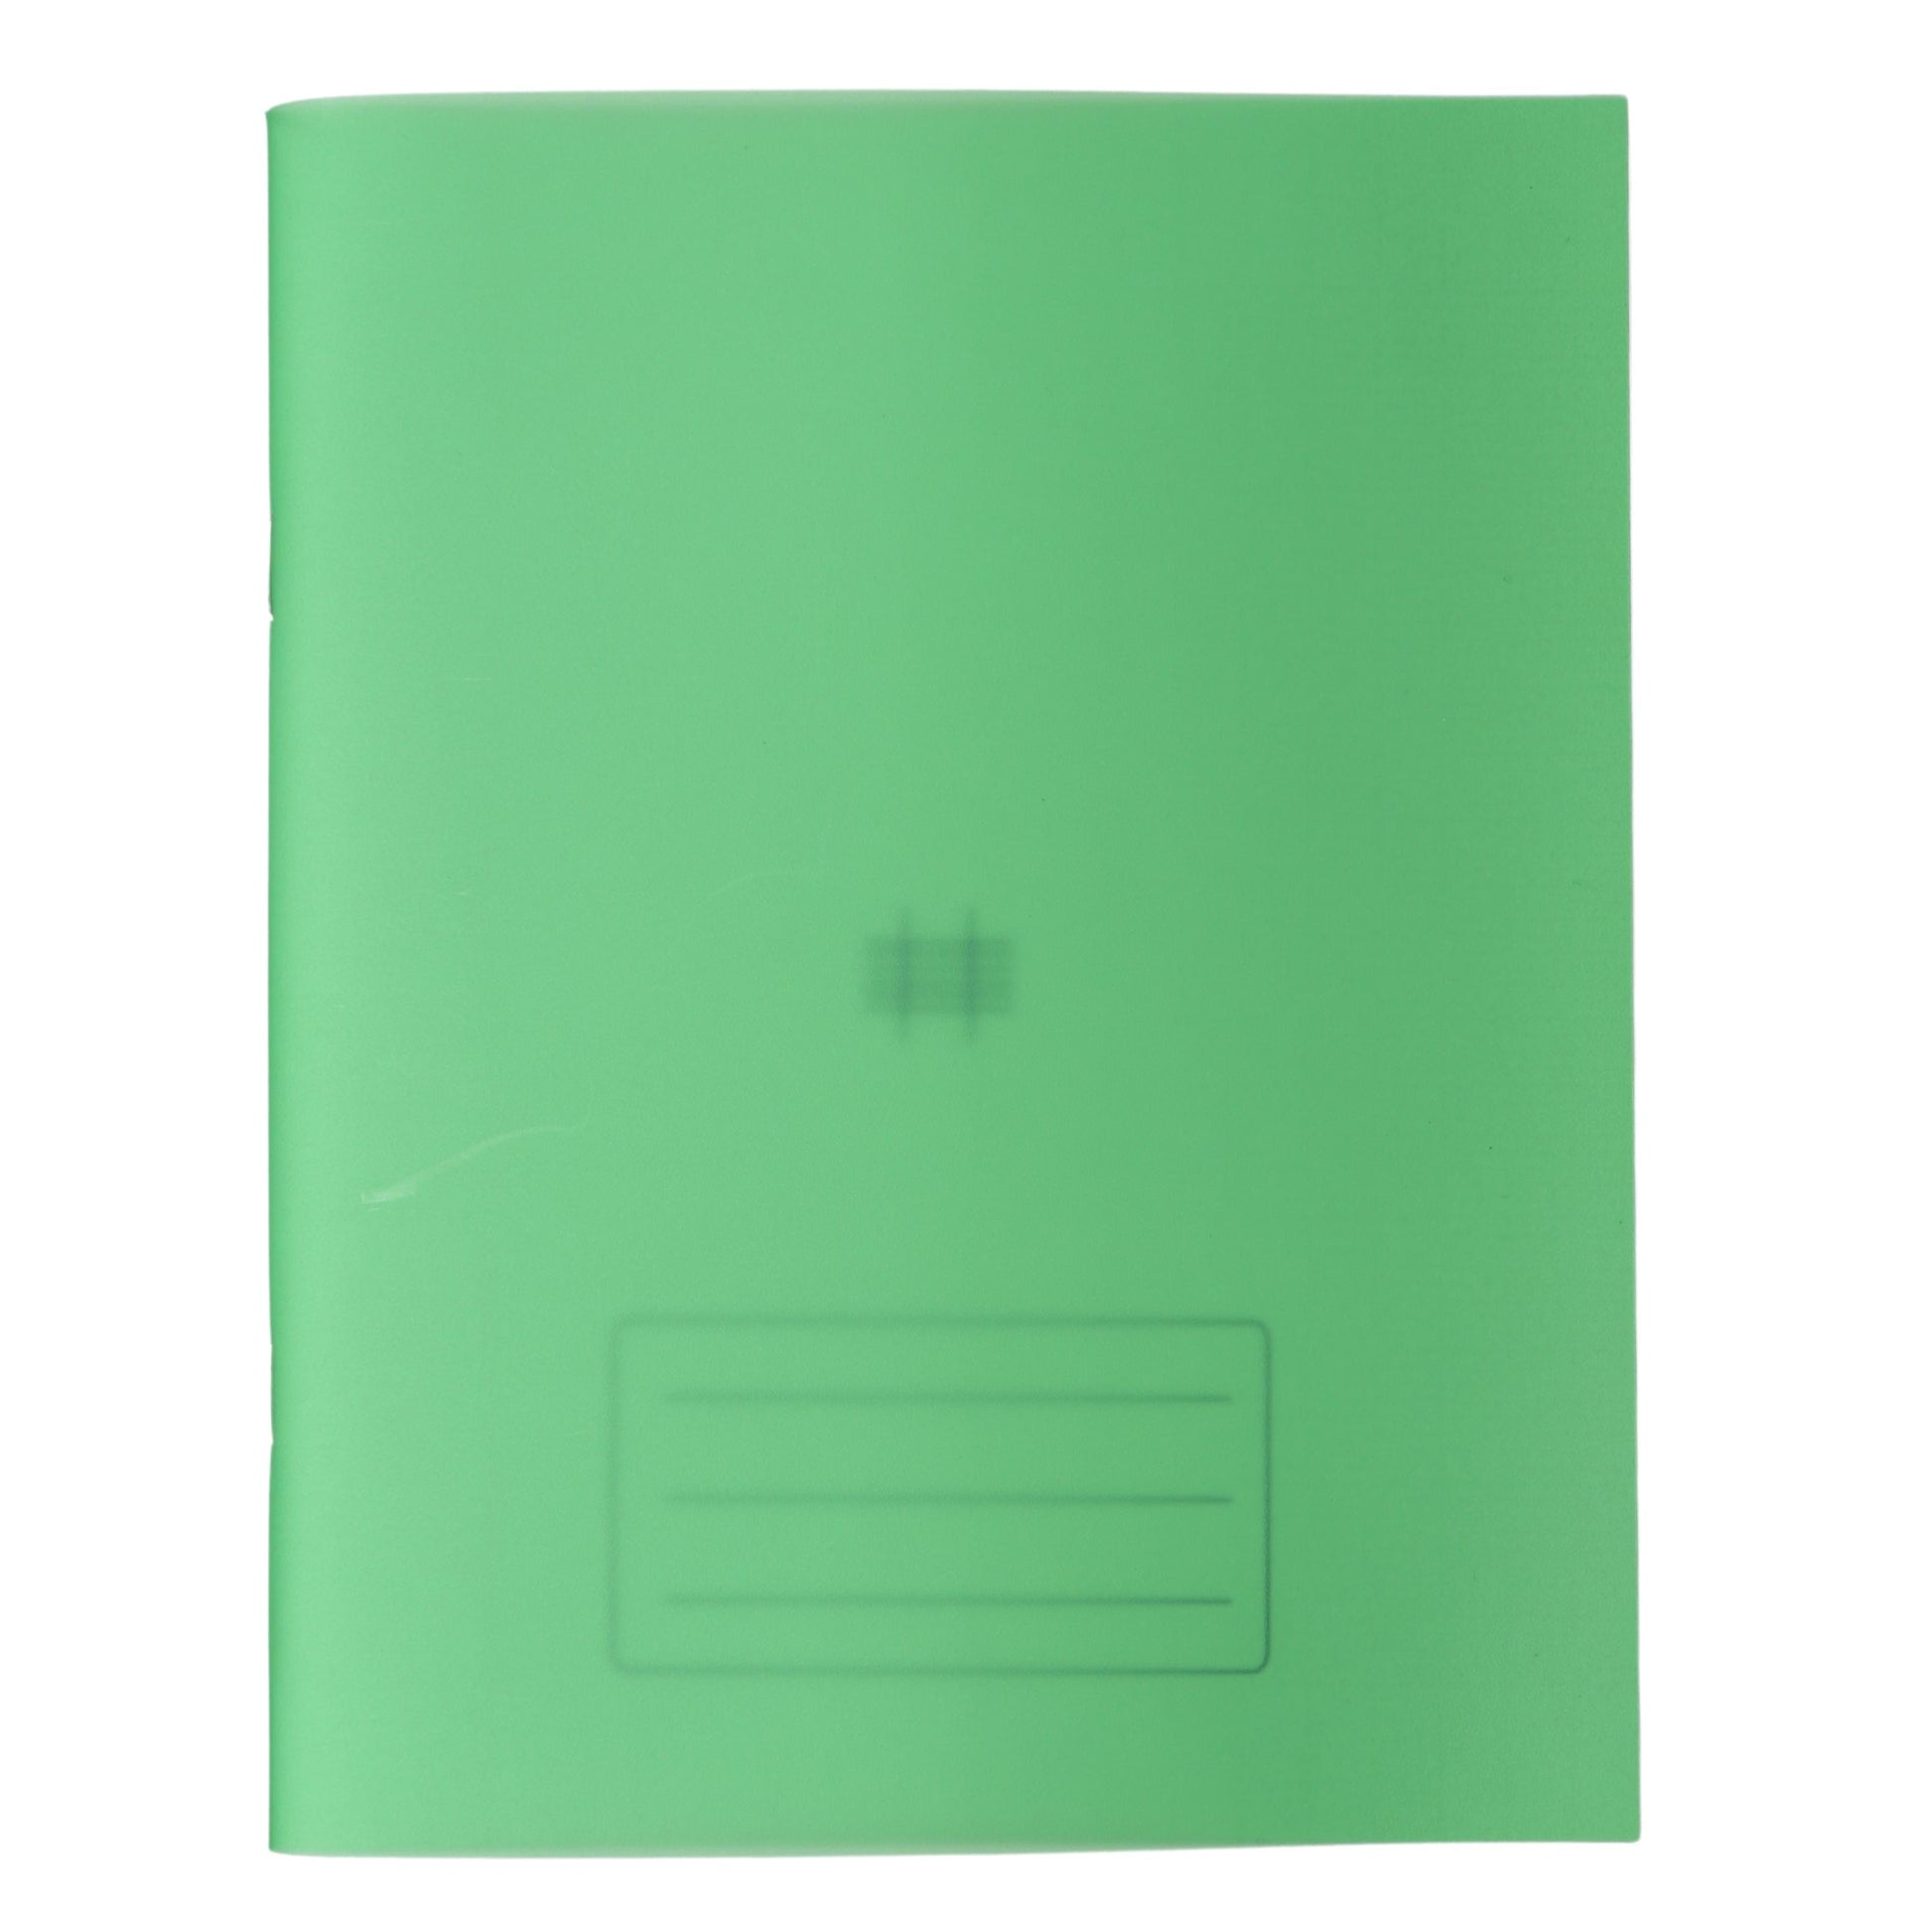 MATNI GROUP School Bags & Supplies Green MATNI GROUP - Small CopyBook 48 Sheets